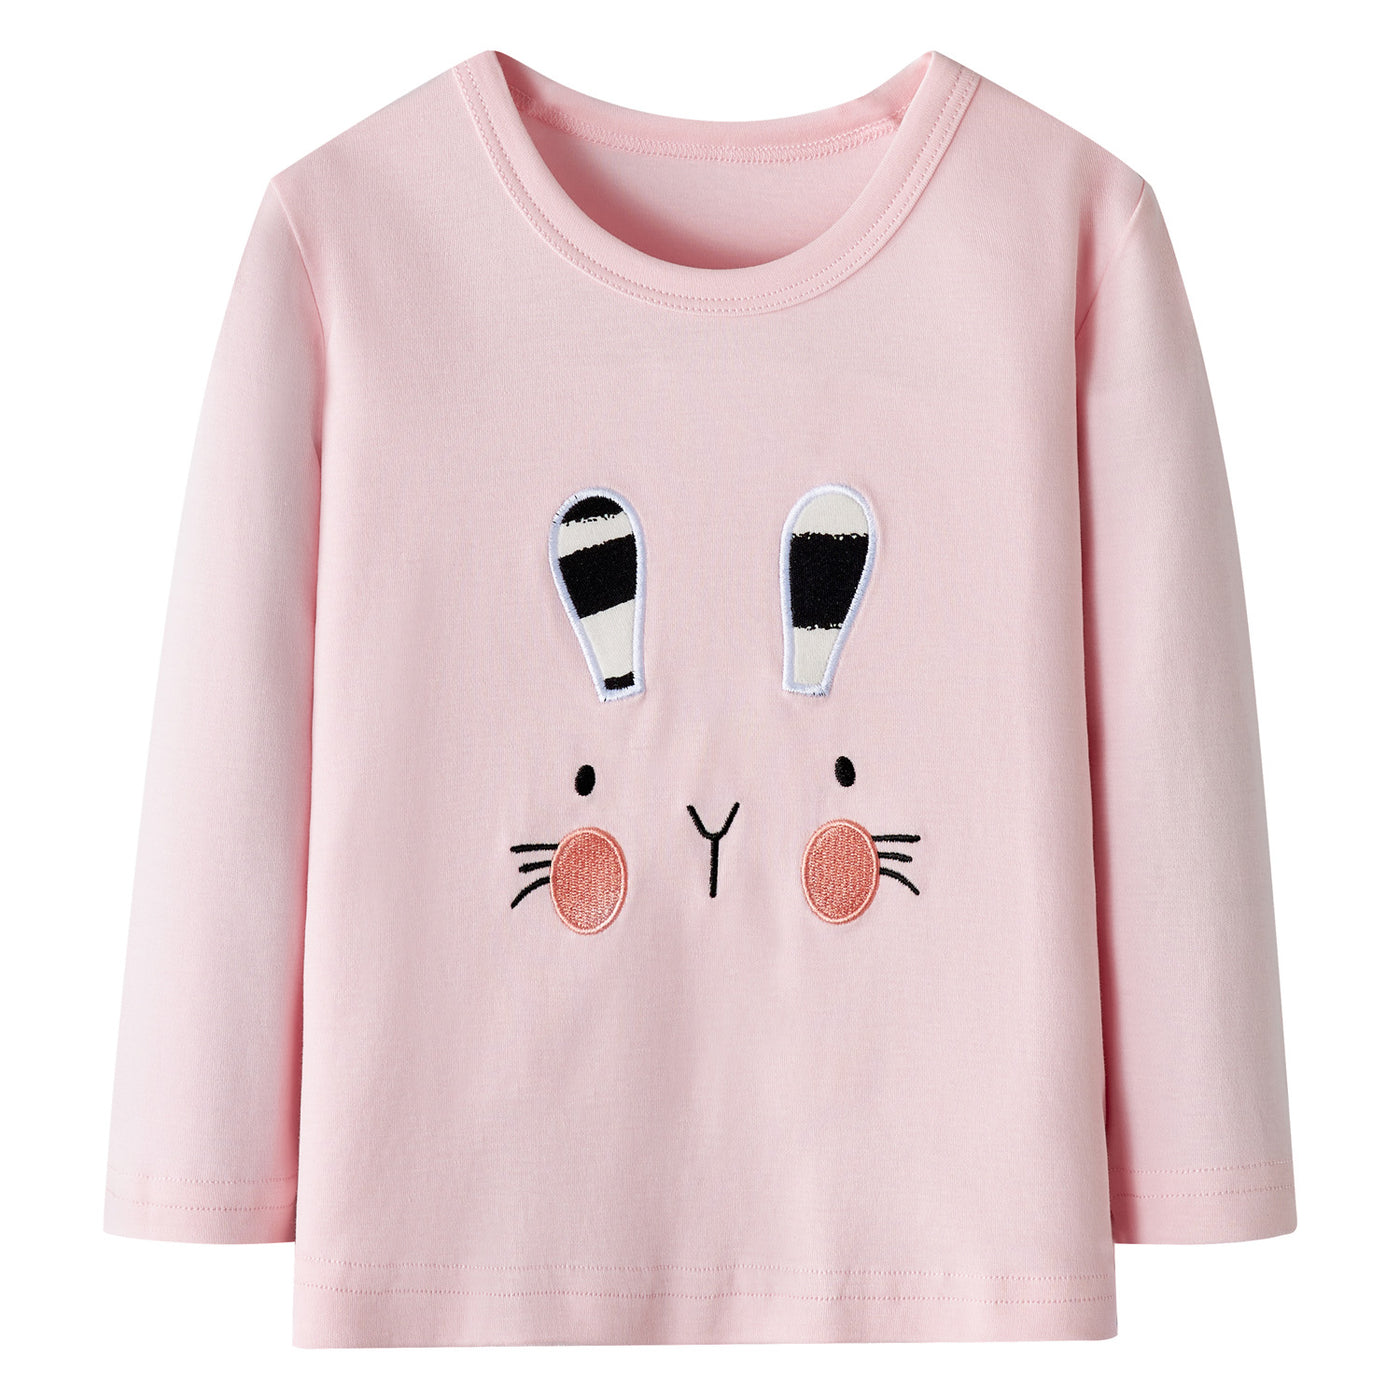 Baby Kids Pajamas Bunny Pink Top w Grey Pants Set - Little Kooma